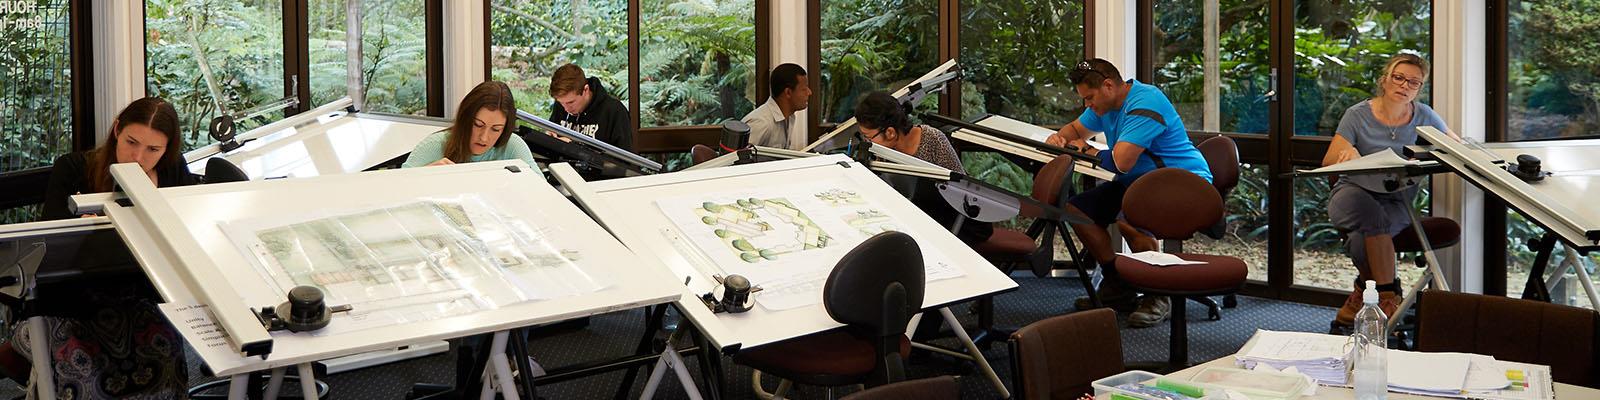 Landscape design students working in design studio